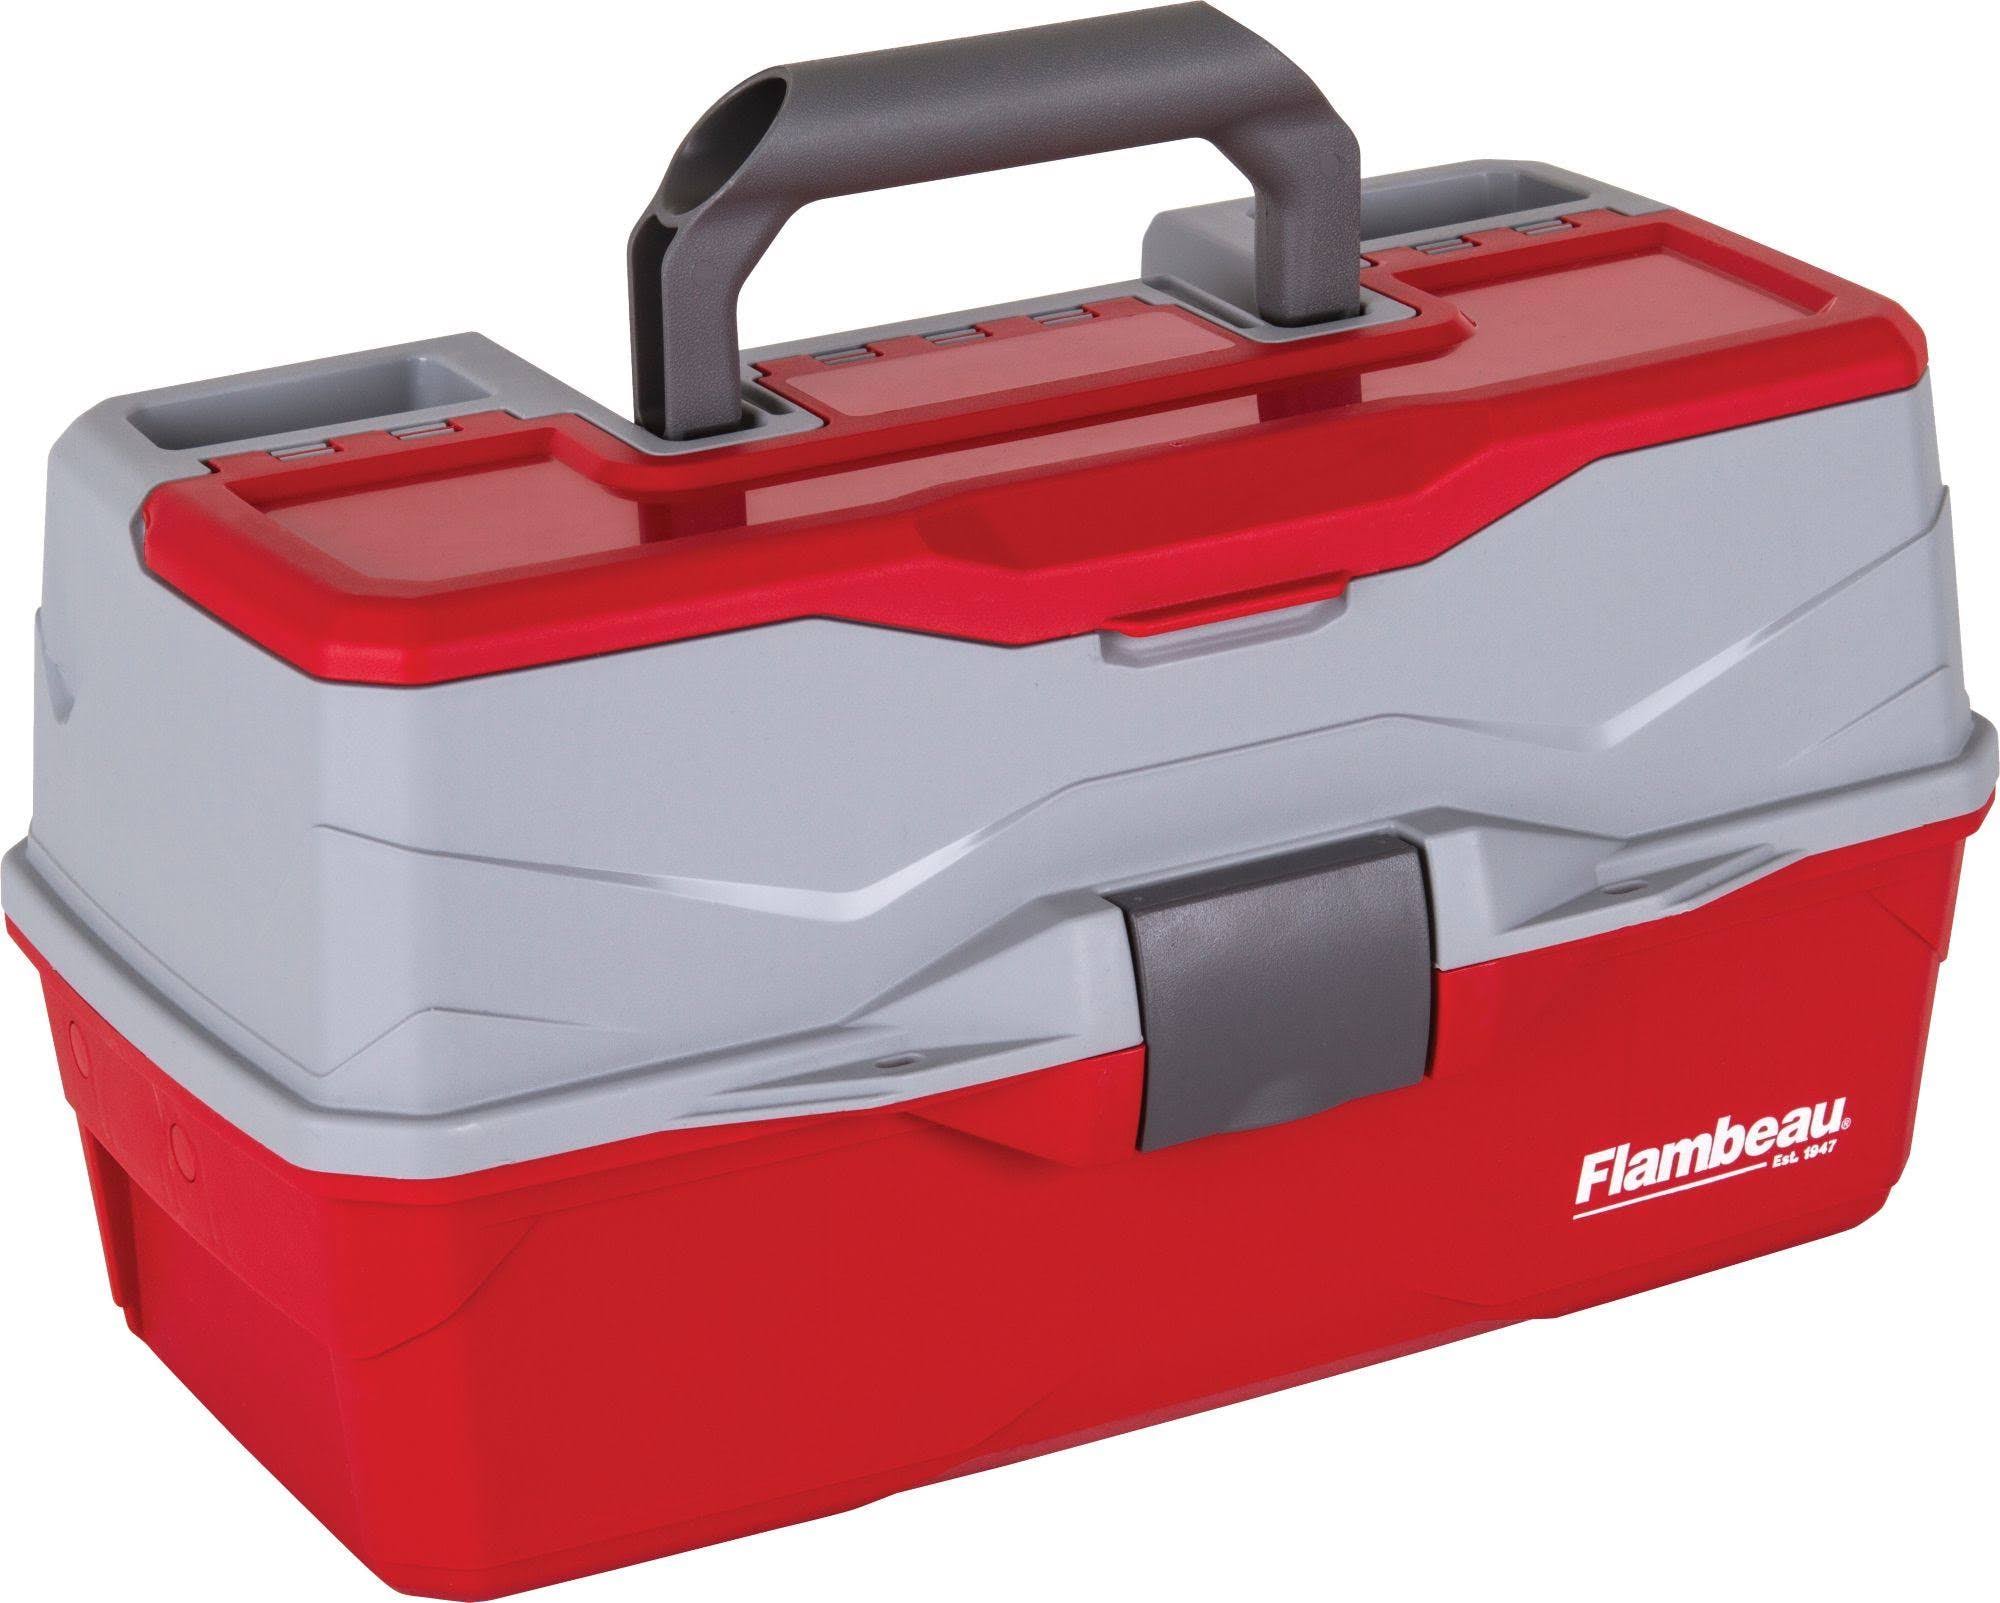 Flambeau Outdoors Tackle Box - Red, 3 Tray